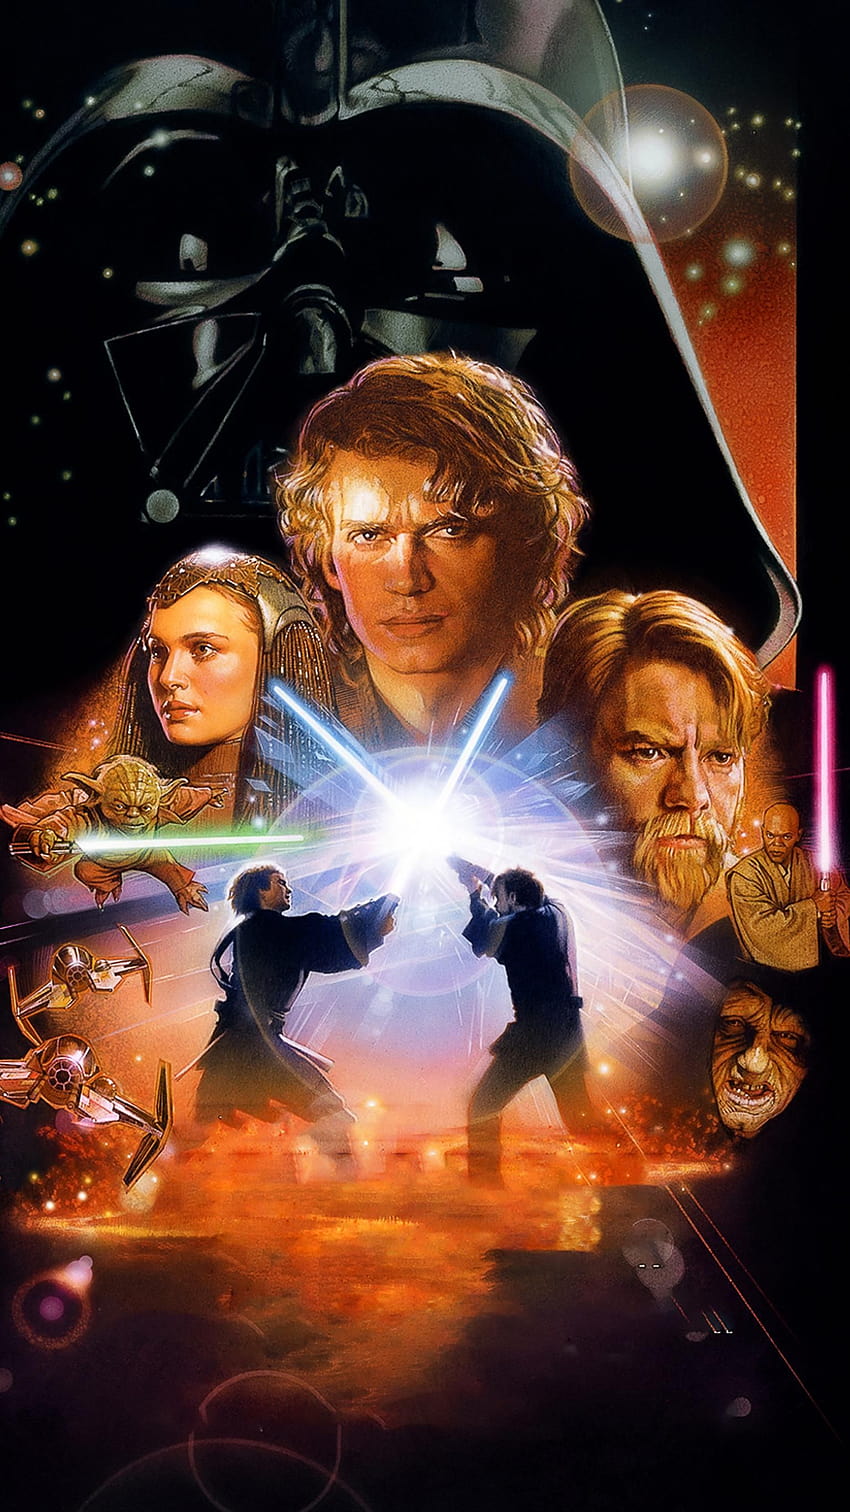 Star Wars: Episode III, balas dendam perang bintang dari sith wallpaper ponsel HD